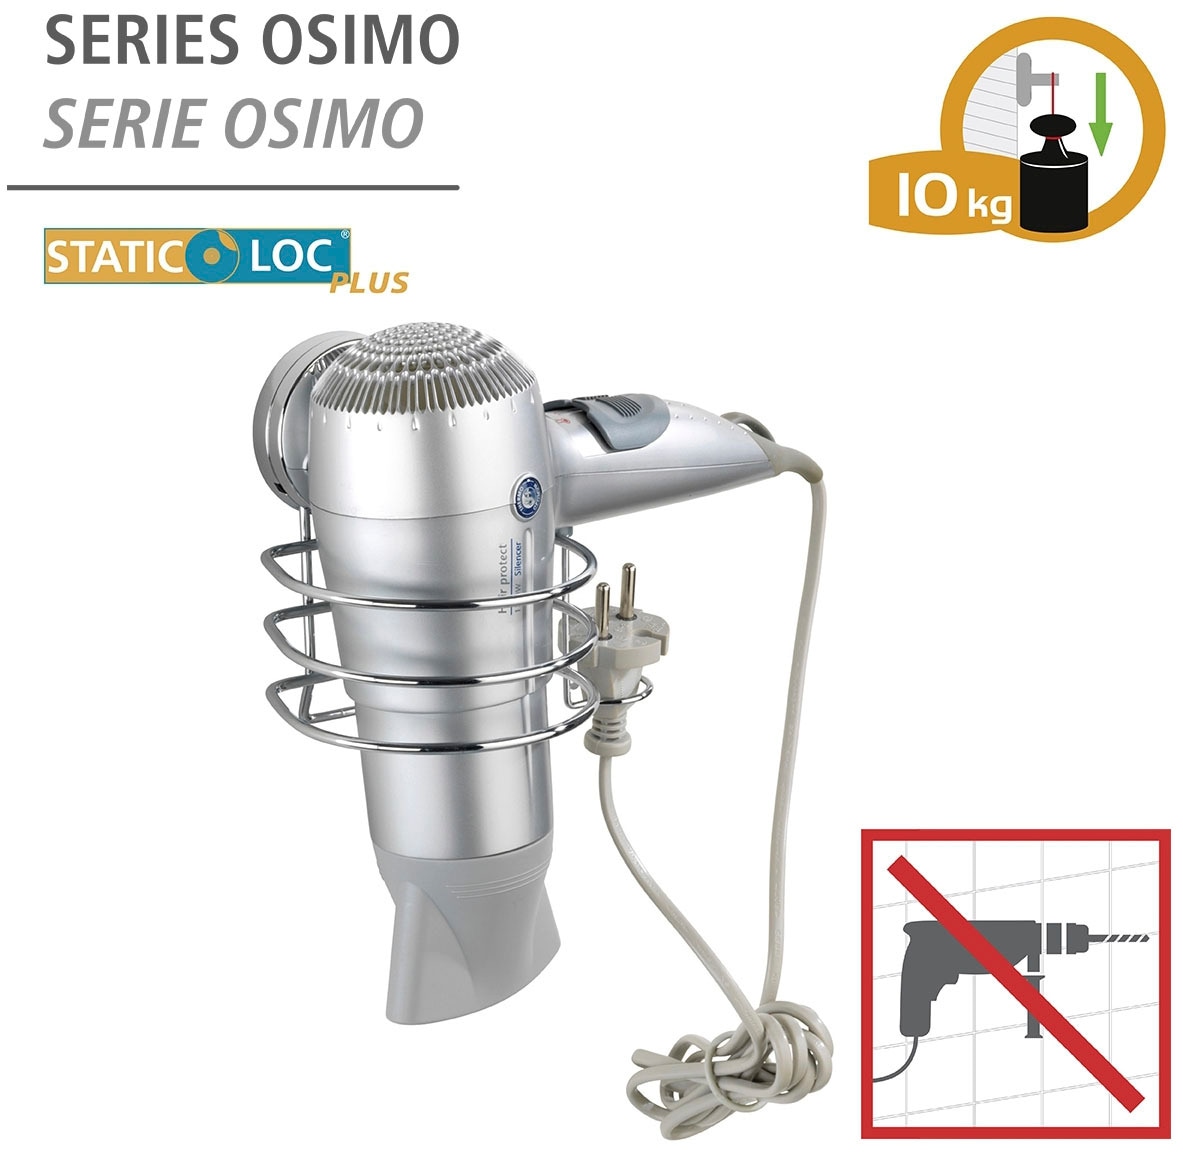 WENKO Haartrocknerhalter »Static-Loc® OTTO Osimo«, Plus bei Bohren ohne Befestigen